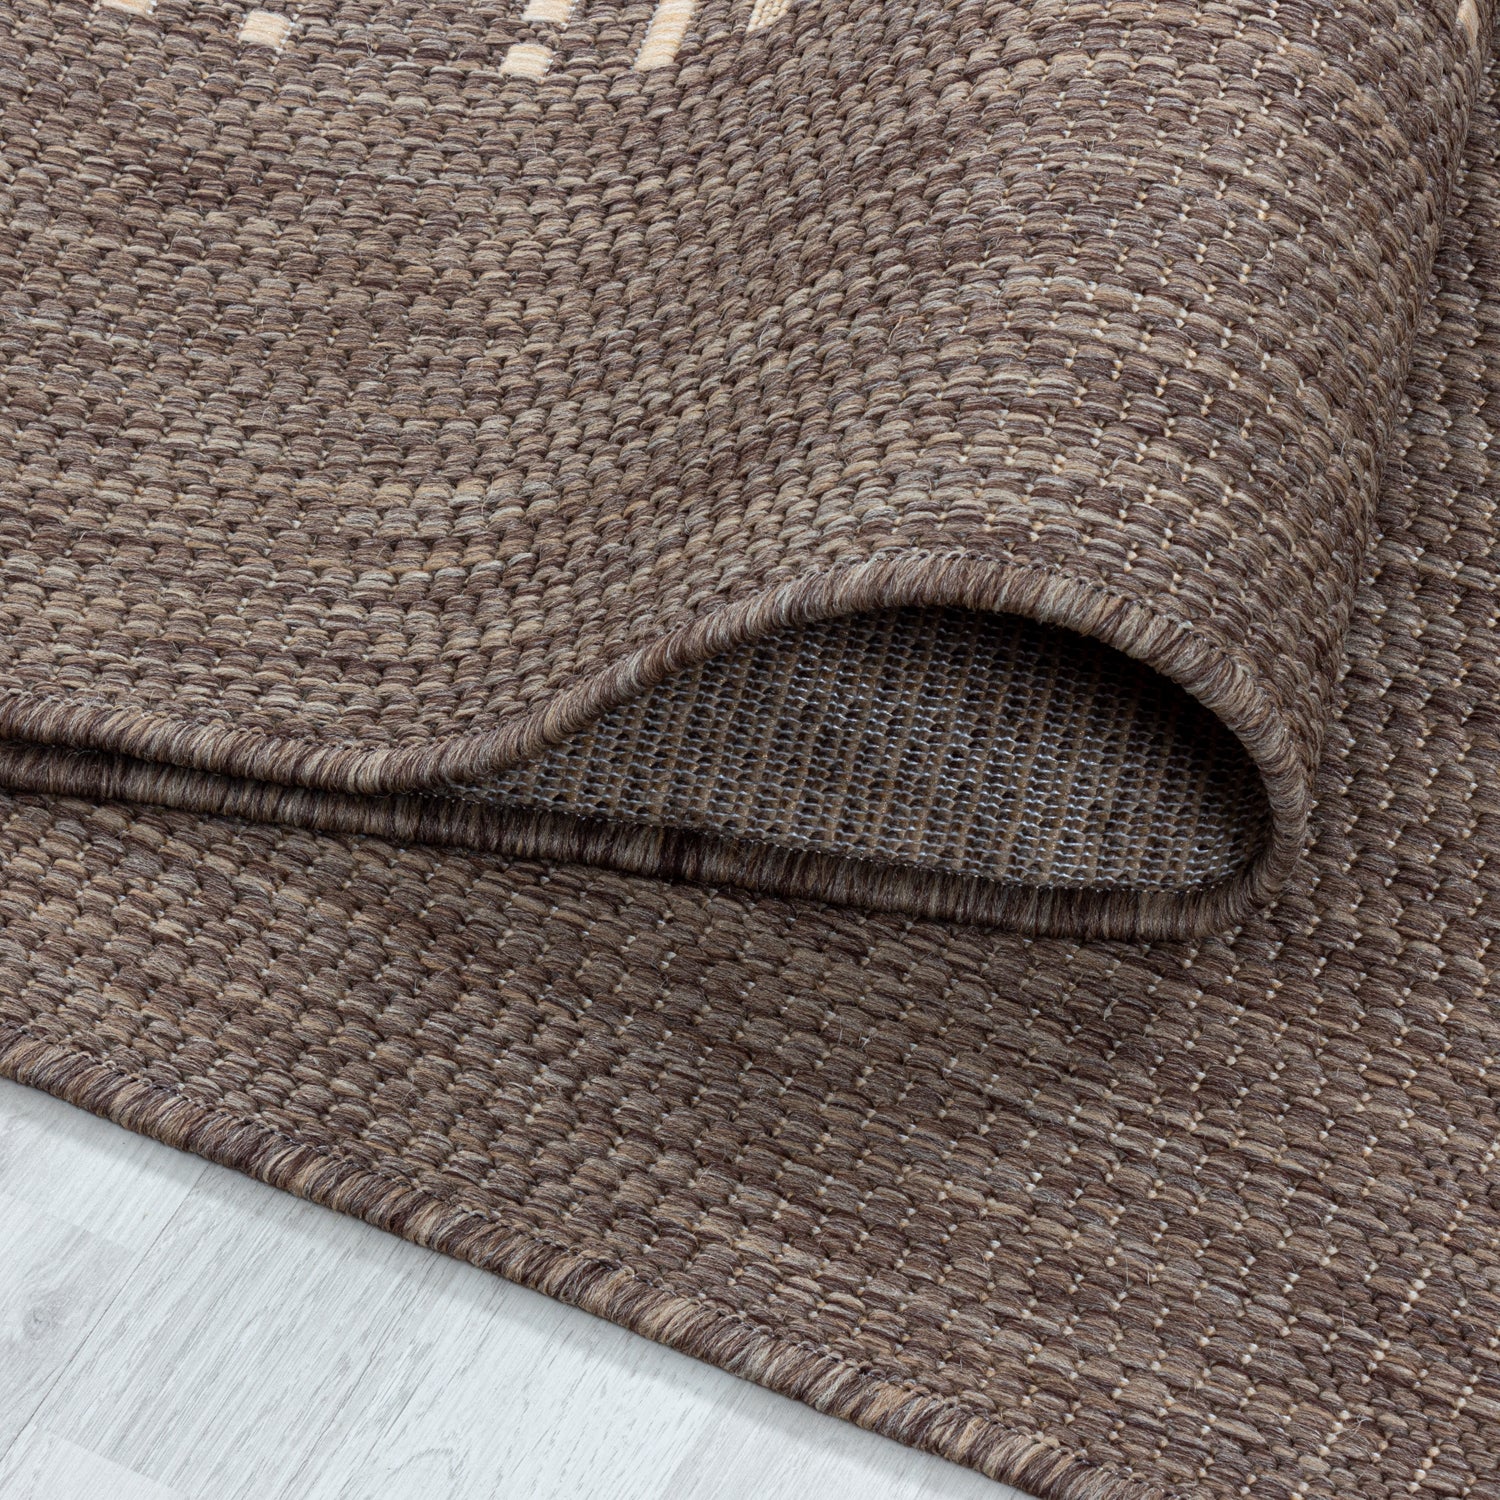 Modern Flachgewebe Teppich Indoor Outdoor Linien Muster Sisal Optik Beige Braun